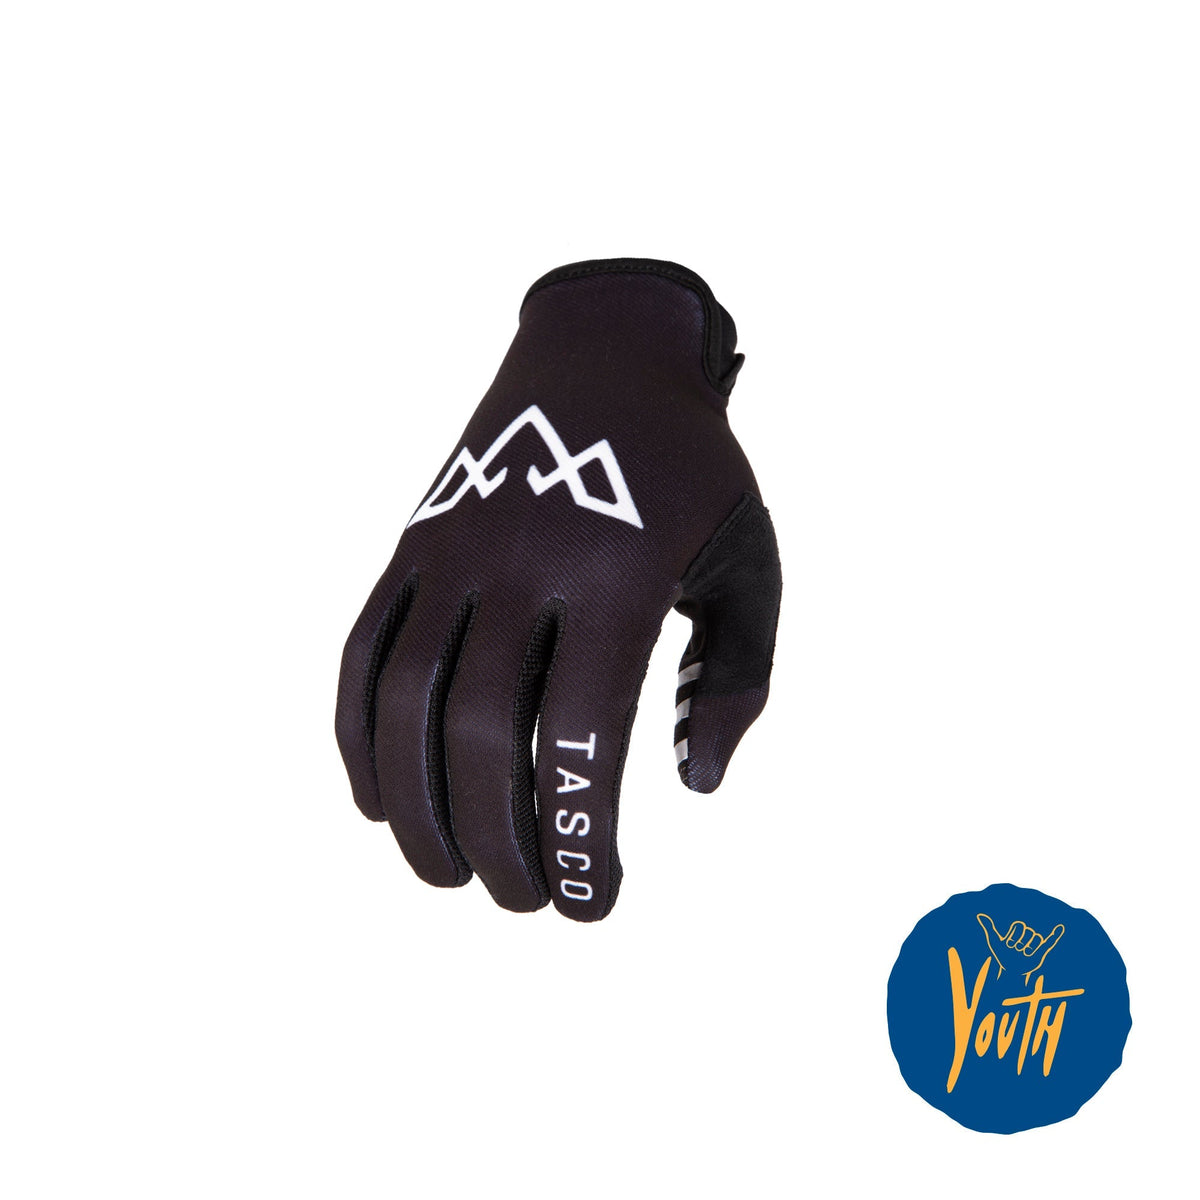 Kids Ridgeline Gloves - Black